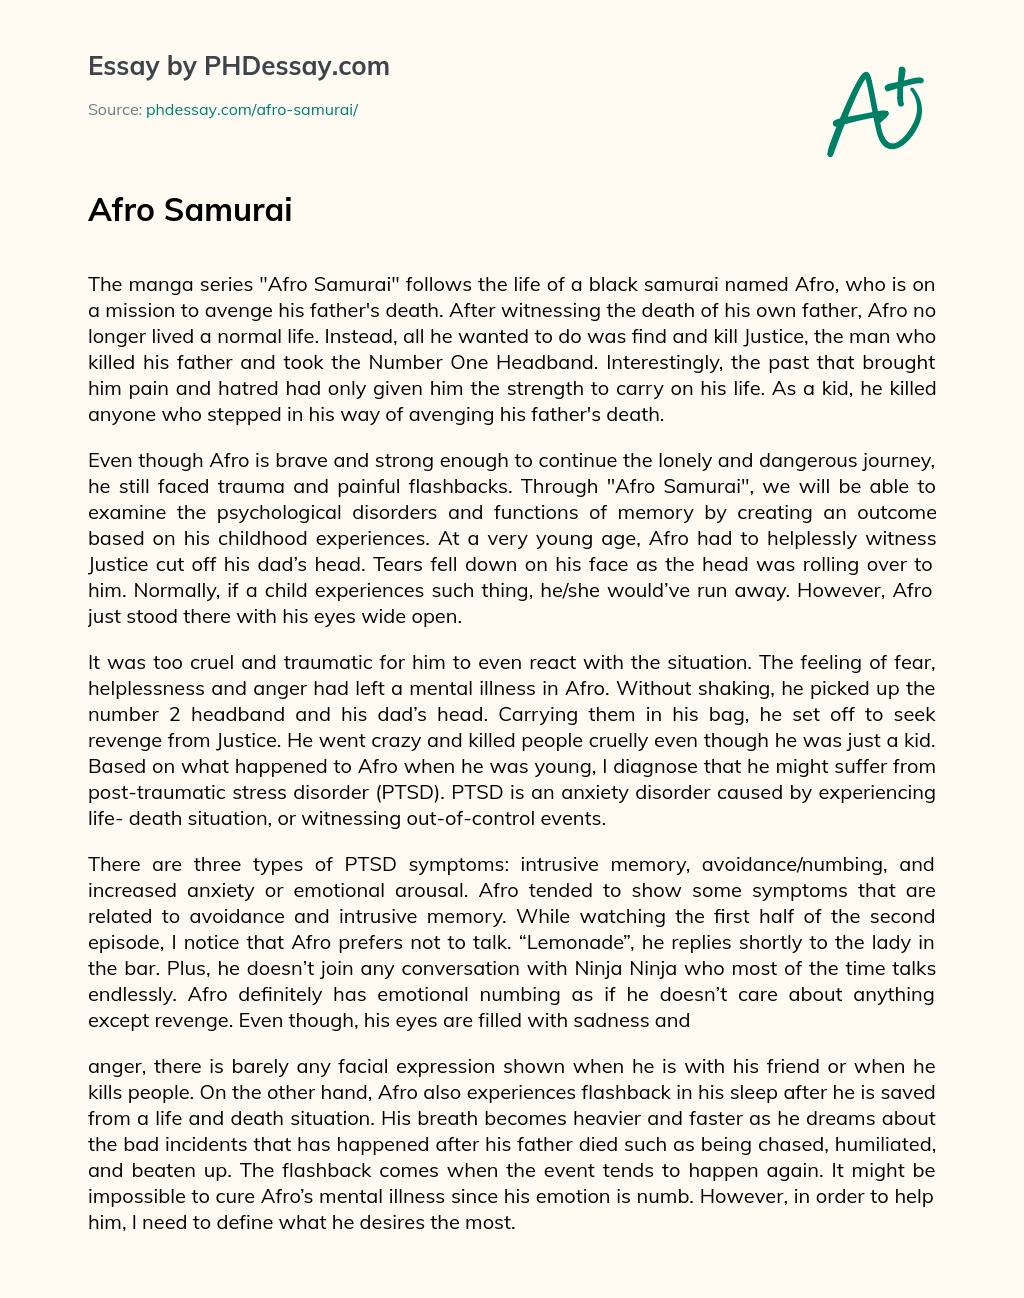 Analysis of Afro Samurai’s Psychological Trauma and PTSD essay